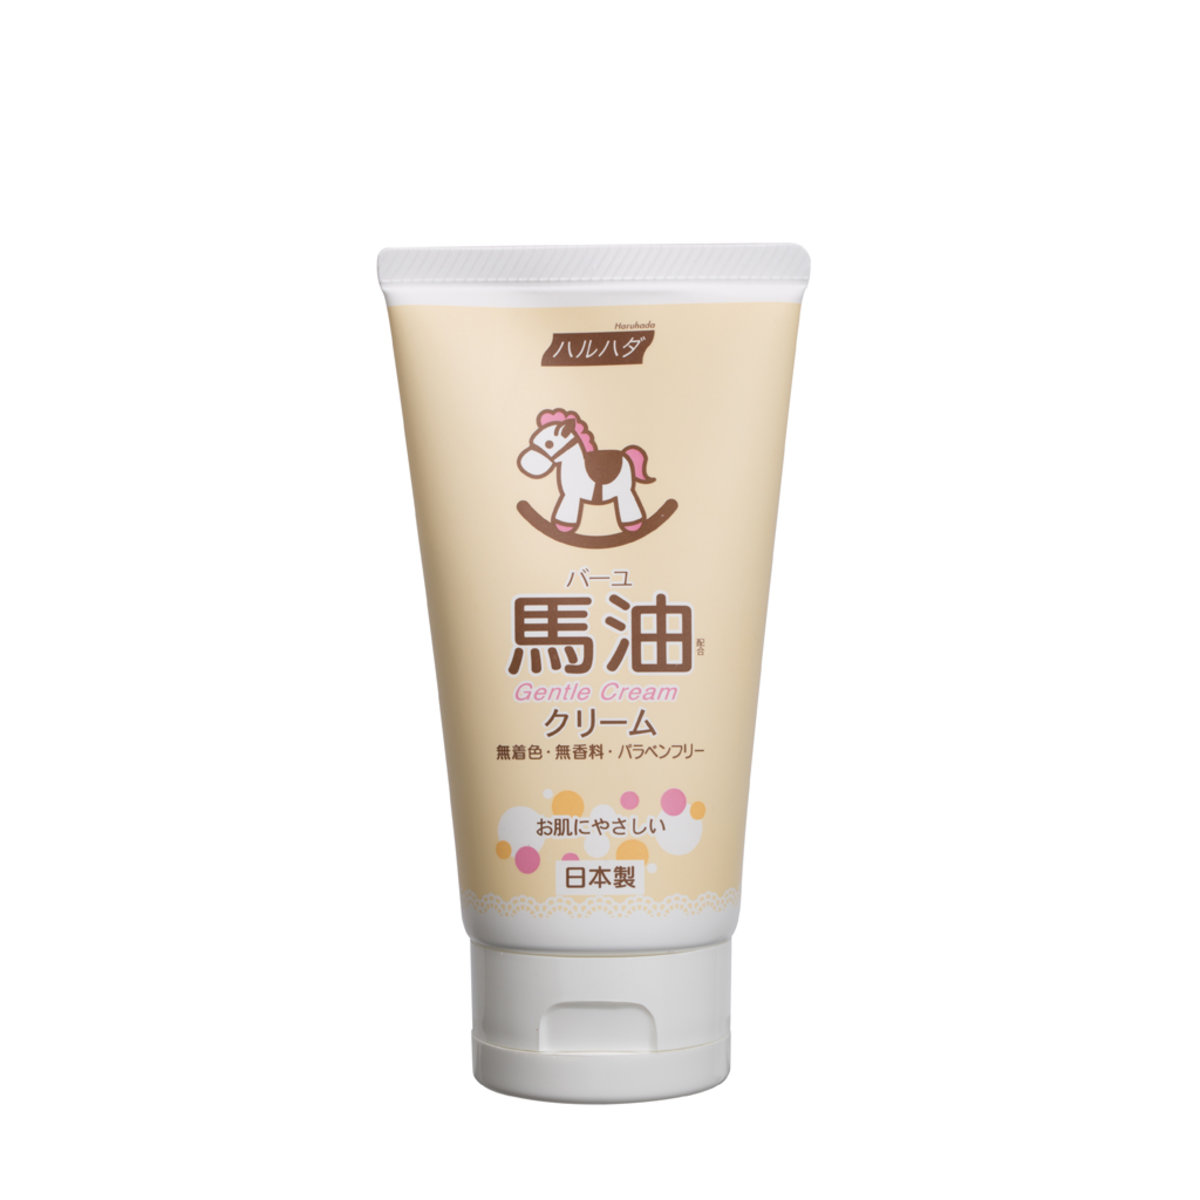 HARUHADA Horse Oil Gentle Cream